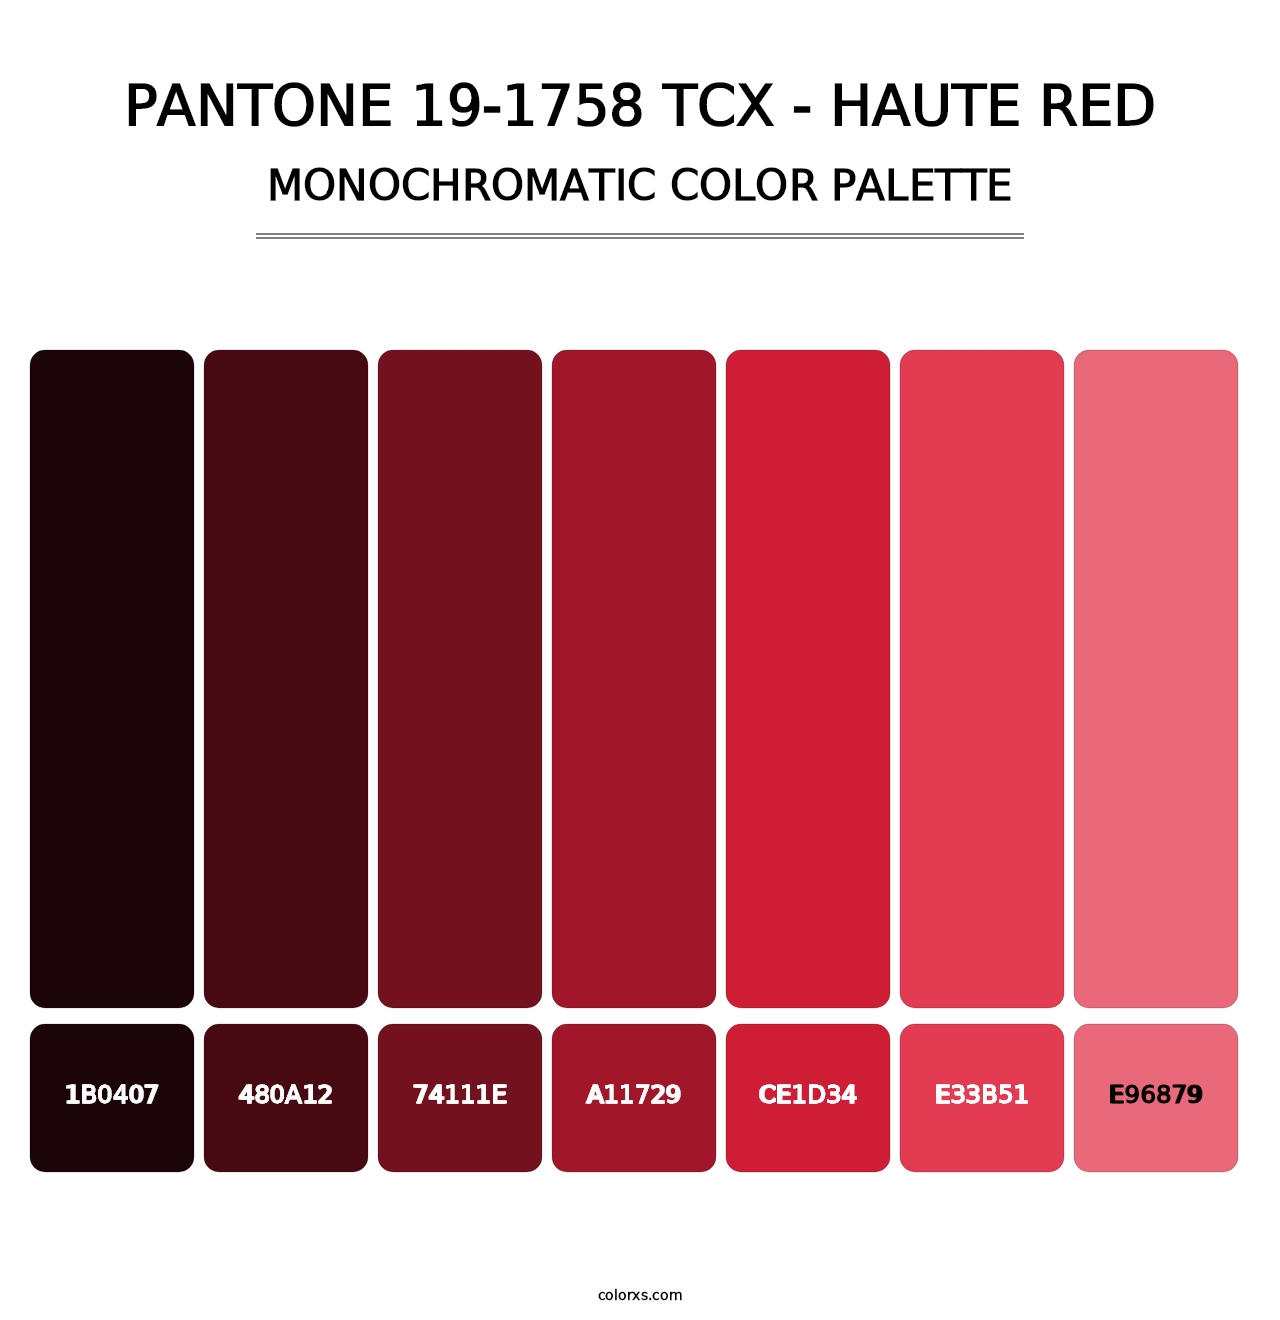 PANTONE 19-1758 TCX - Haute Red - Monochromatic Color Palette